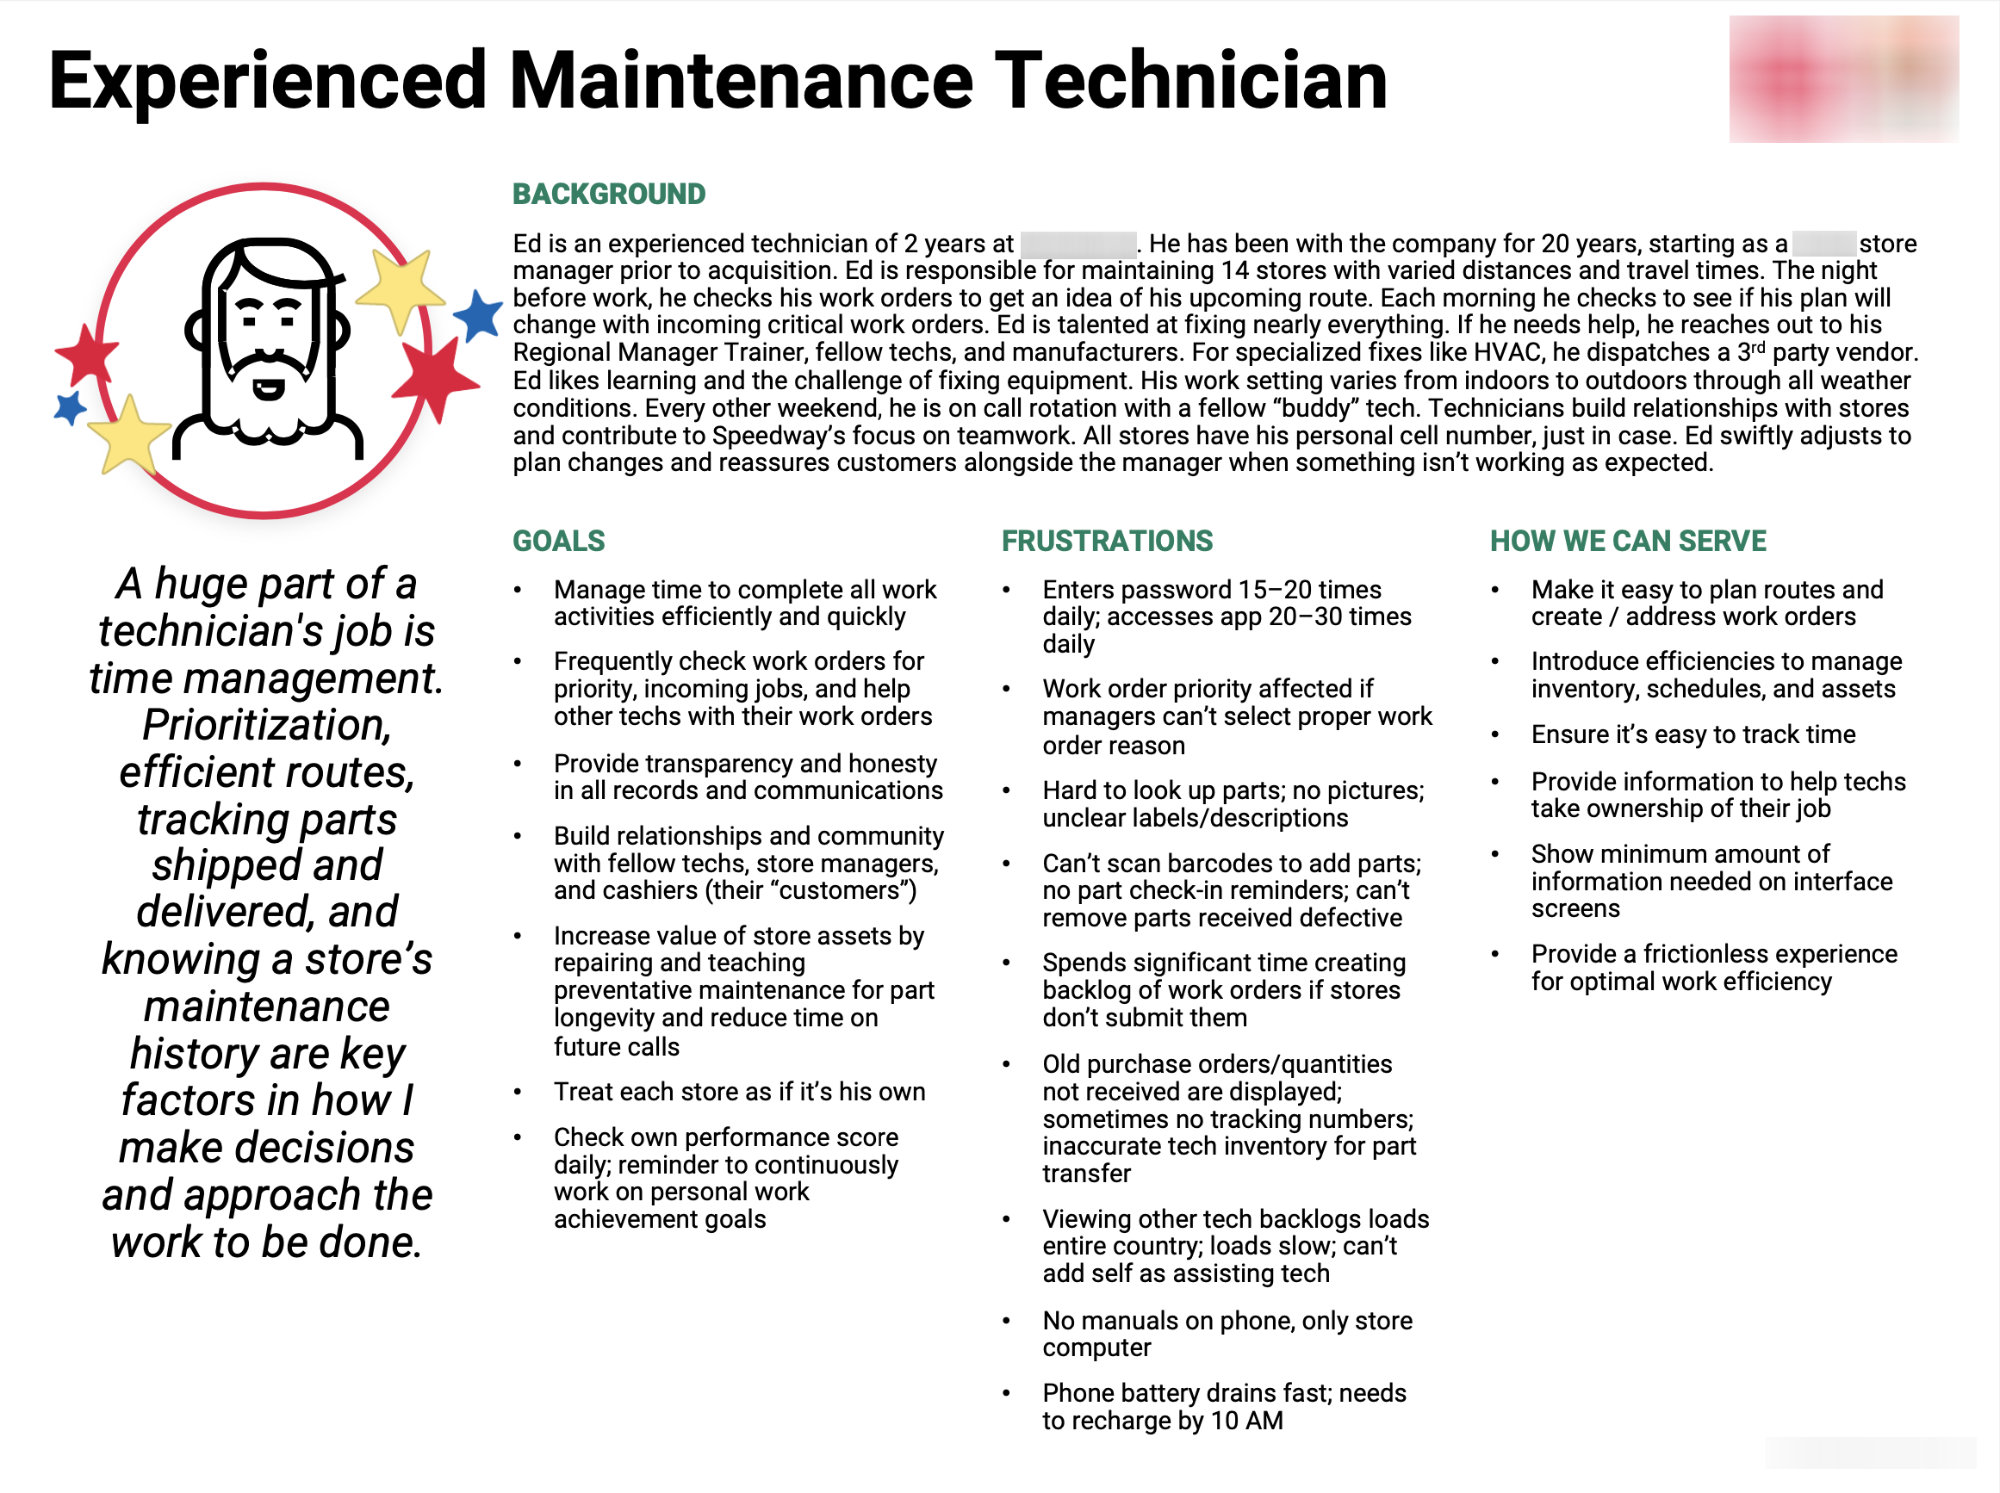 Persona for Experienced Maintenance Technician